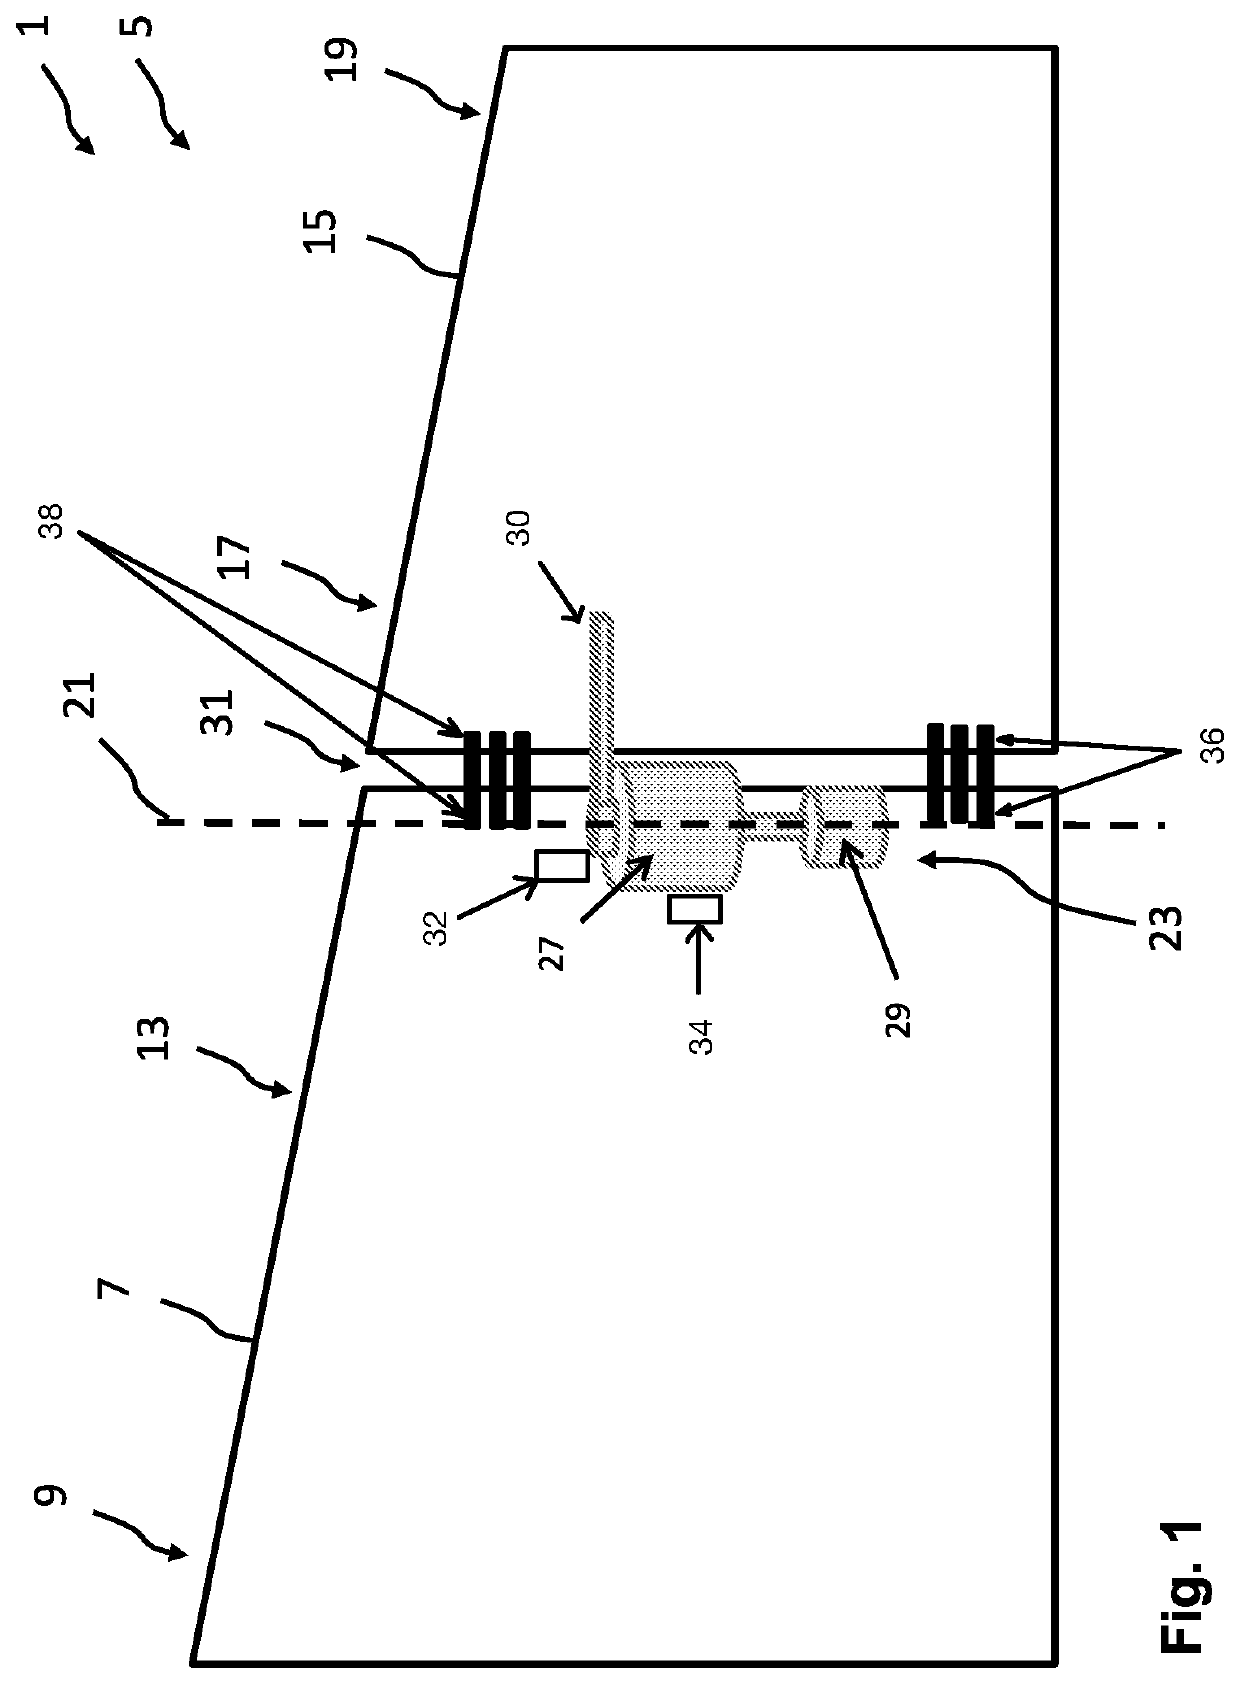 Wing arrangement for an aircraft and aircraft